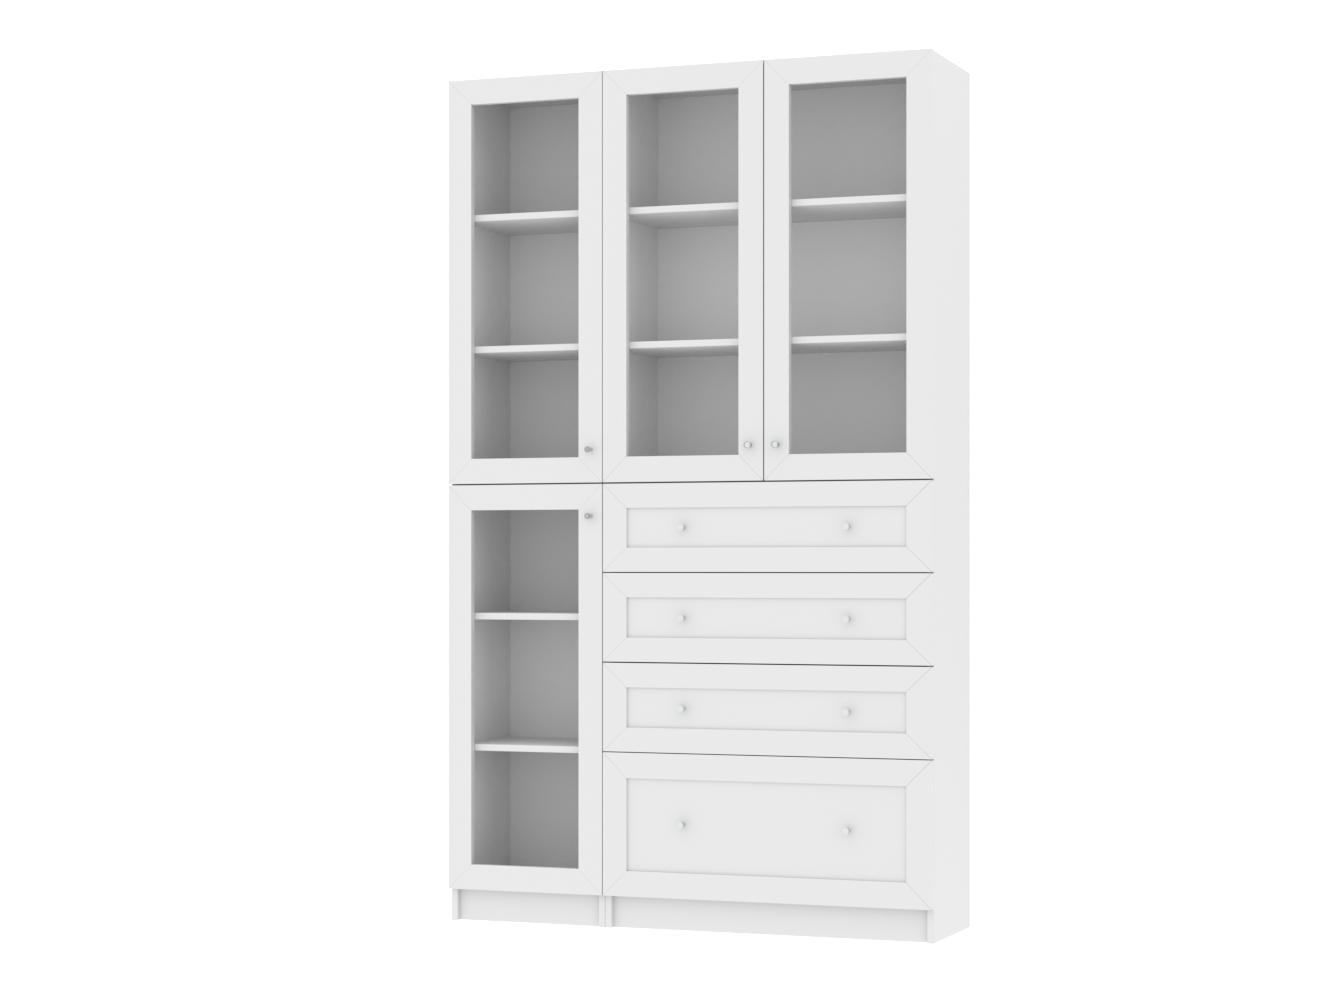  Книжный шкаф Билли 358 white ИКЕА (IKEA) изображение товара